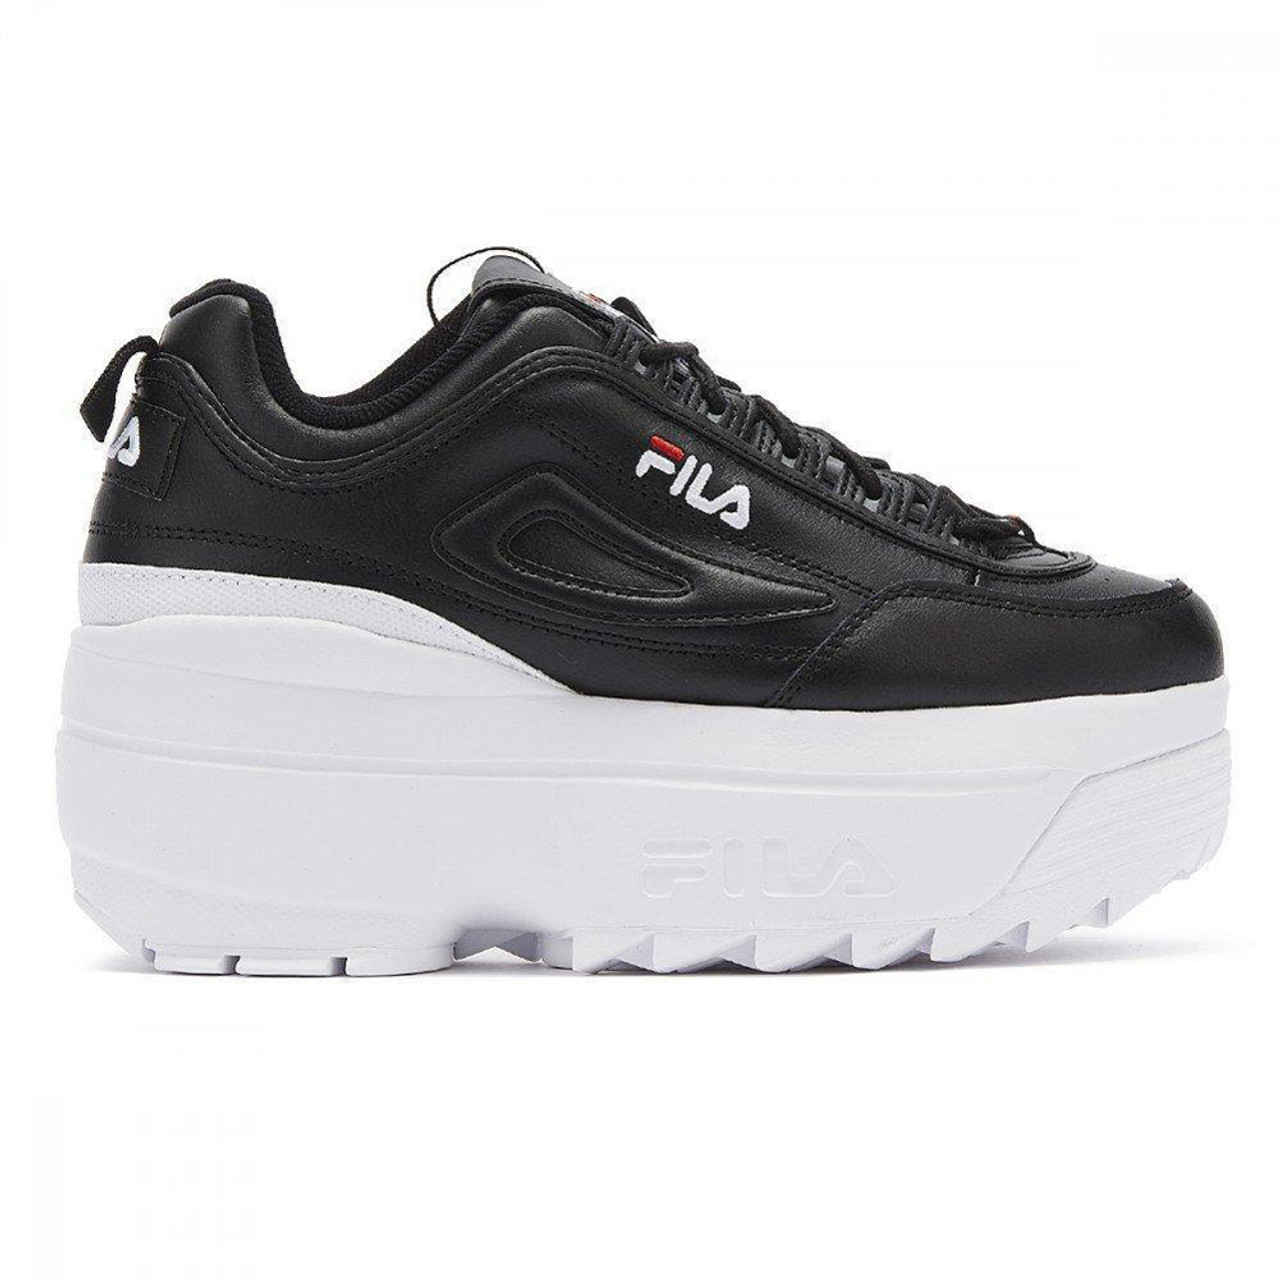 FILA Women's Disruptor 2 Wedge Sneakers